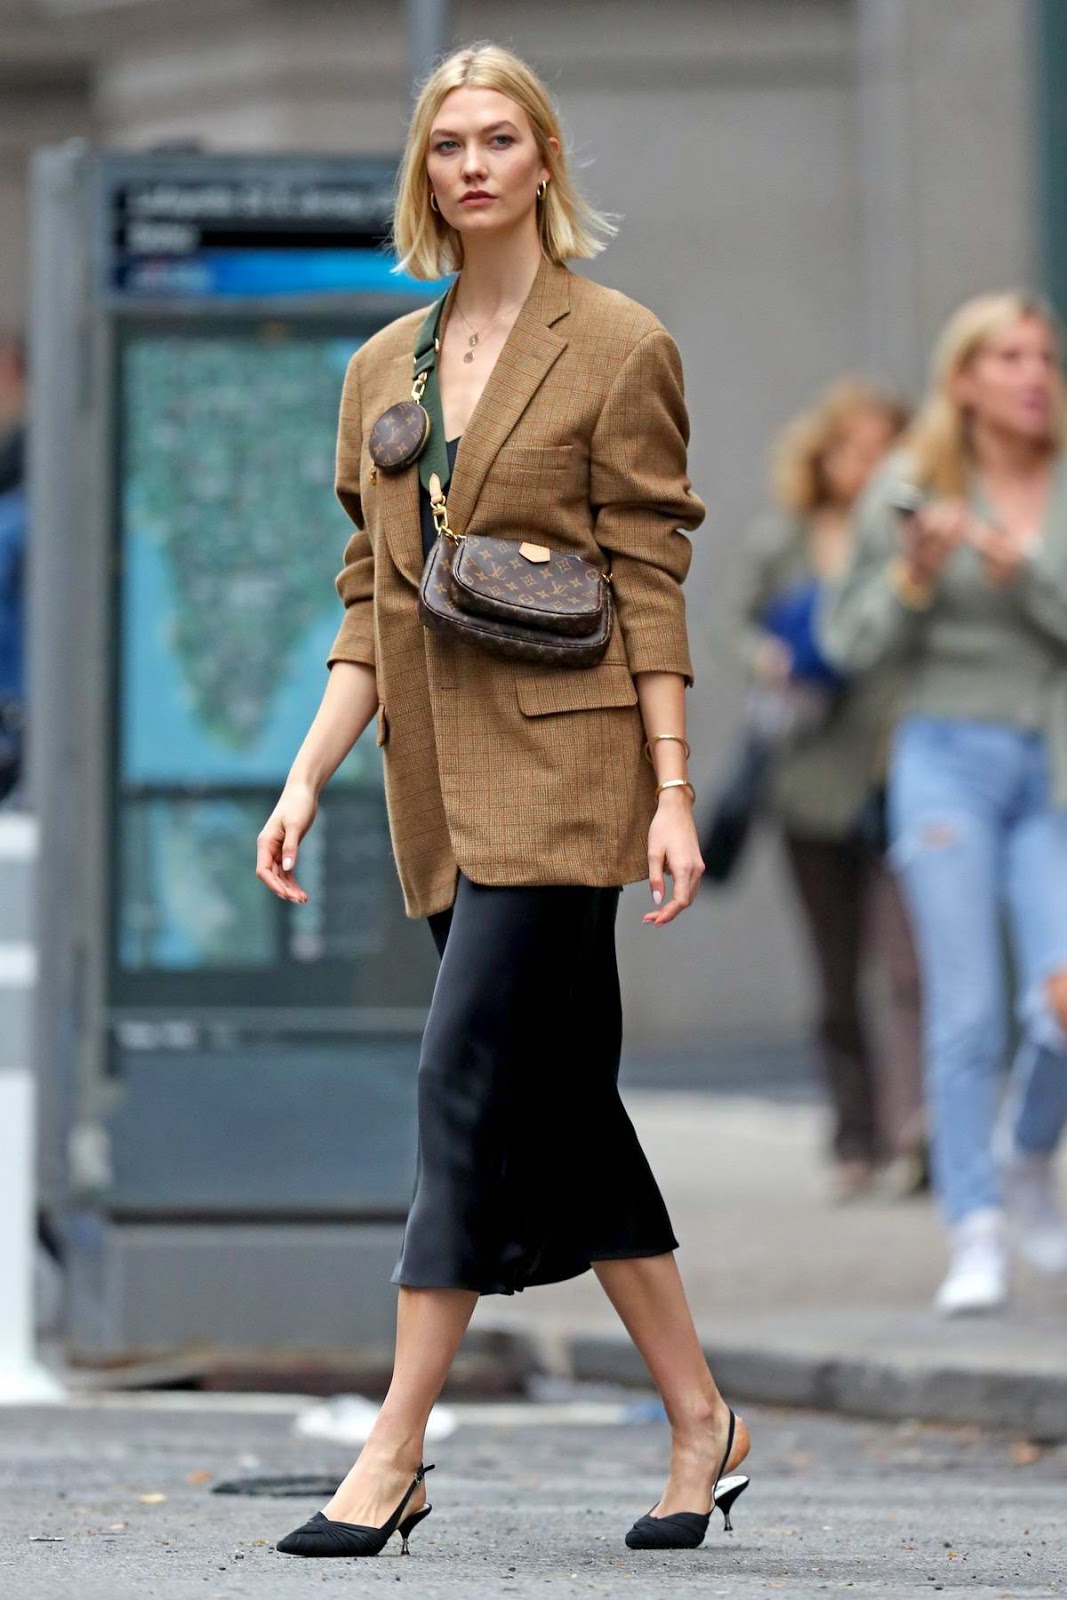 Karlie Kloss high street style fashion in New York City